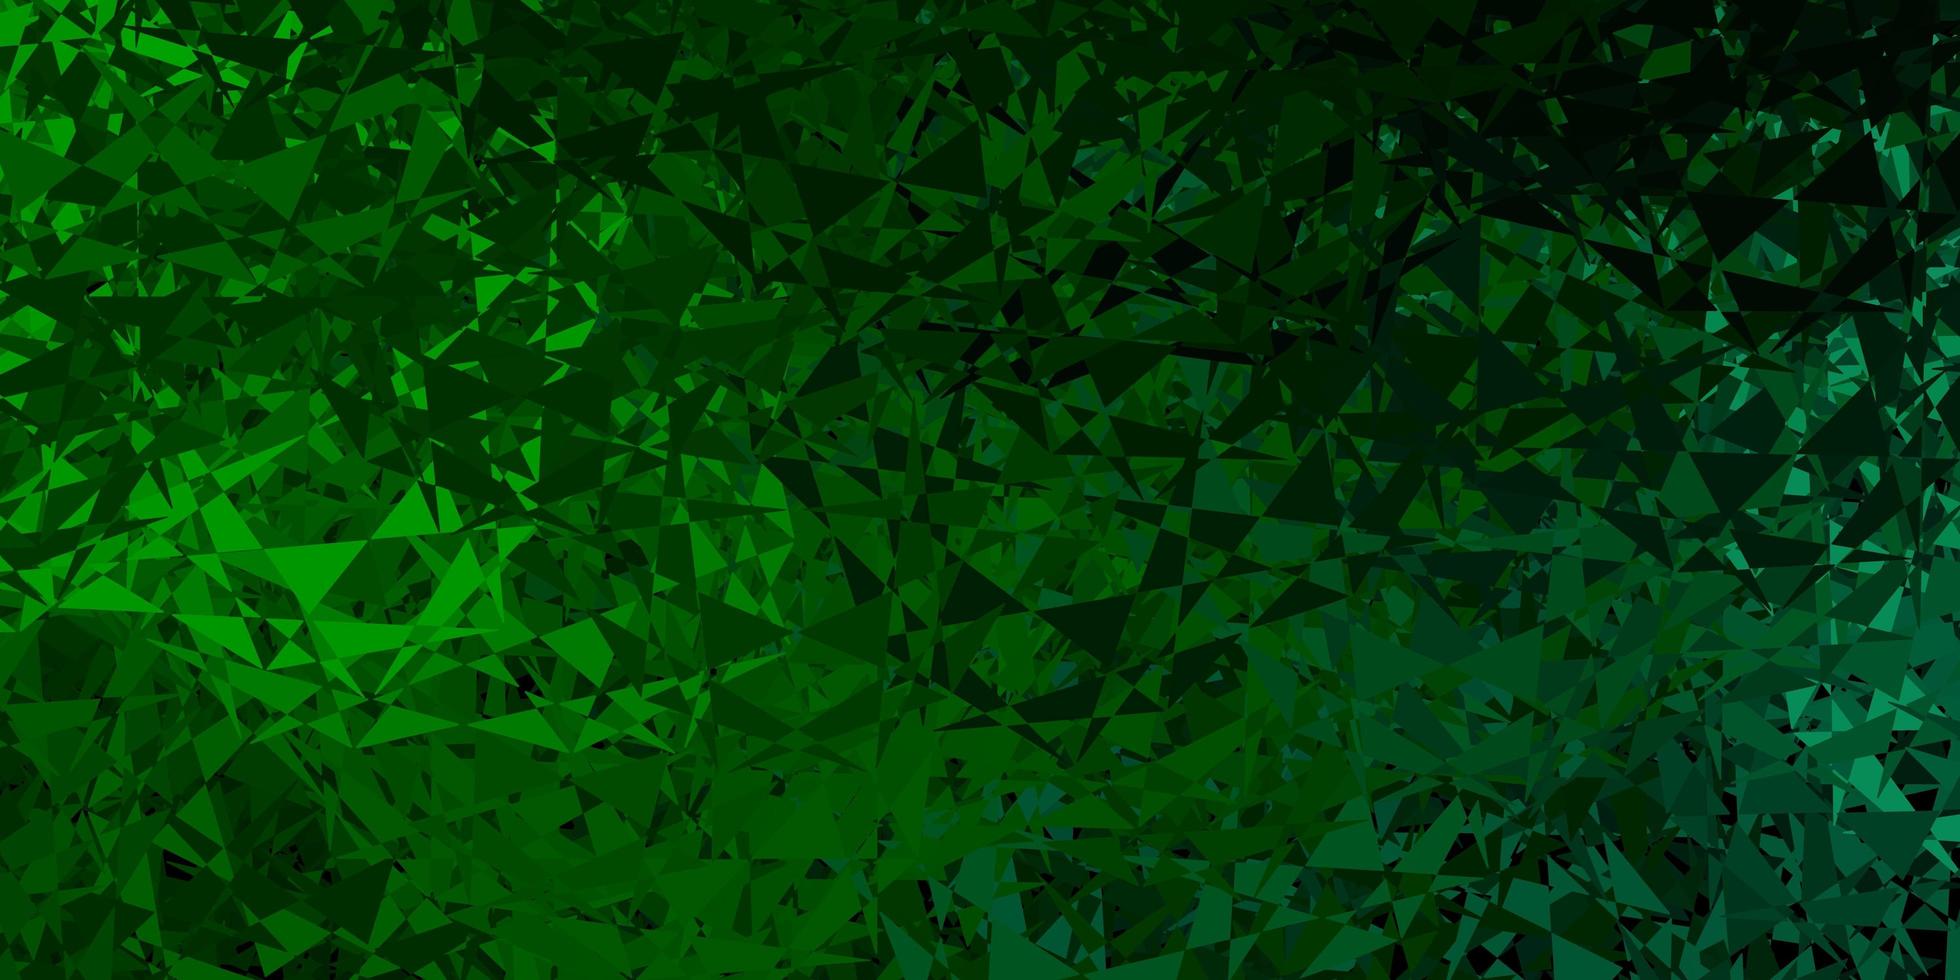 textura vector verde escuro com triângulos aleatórios.